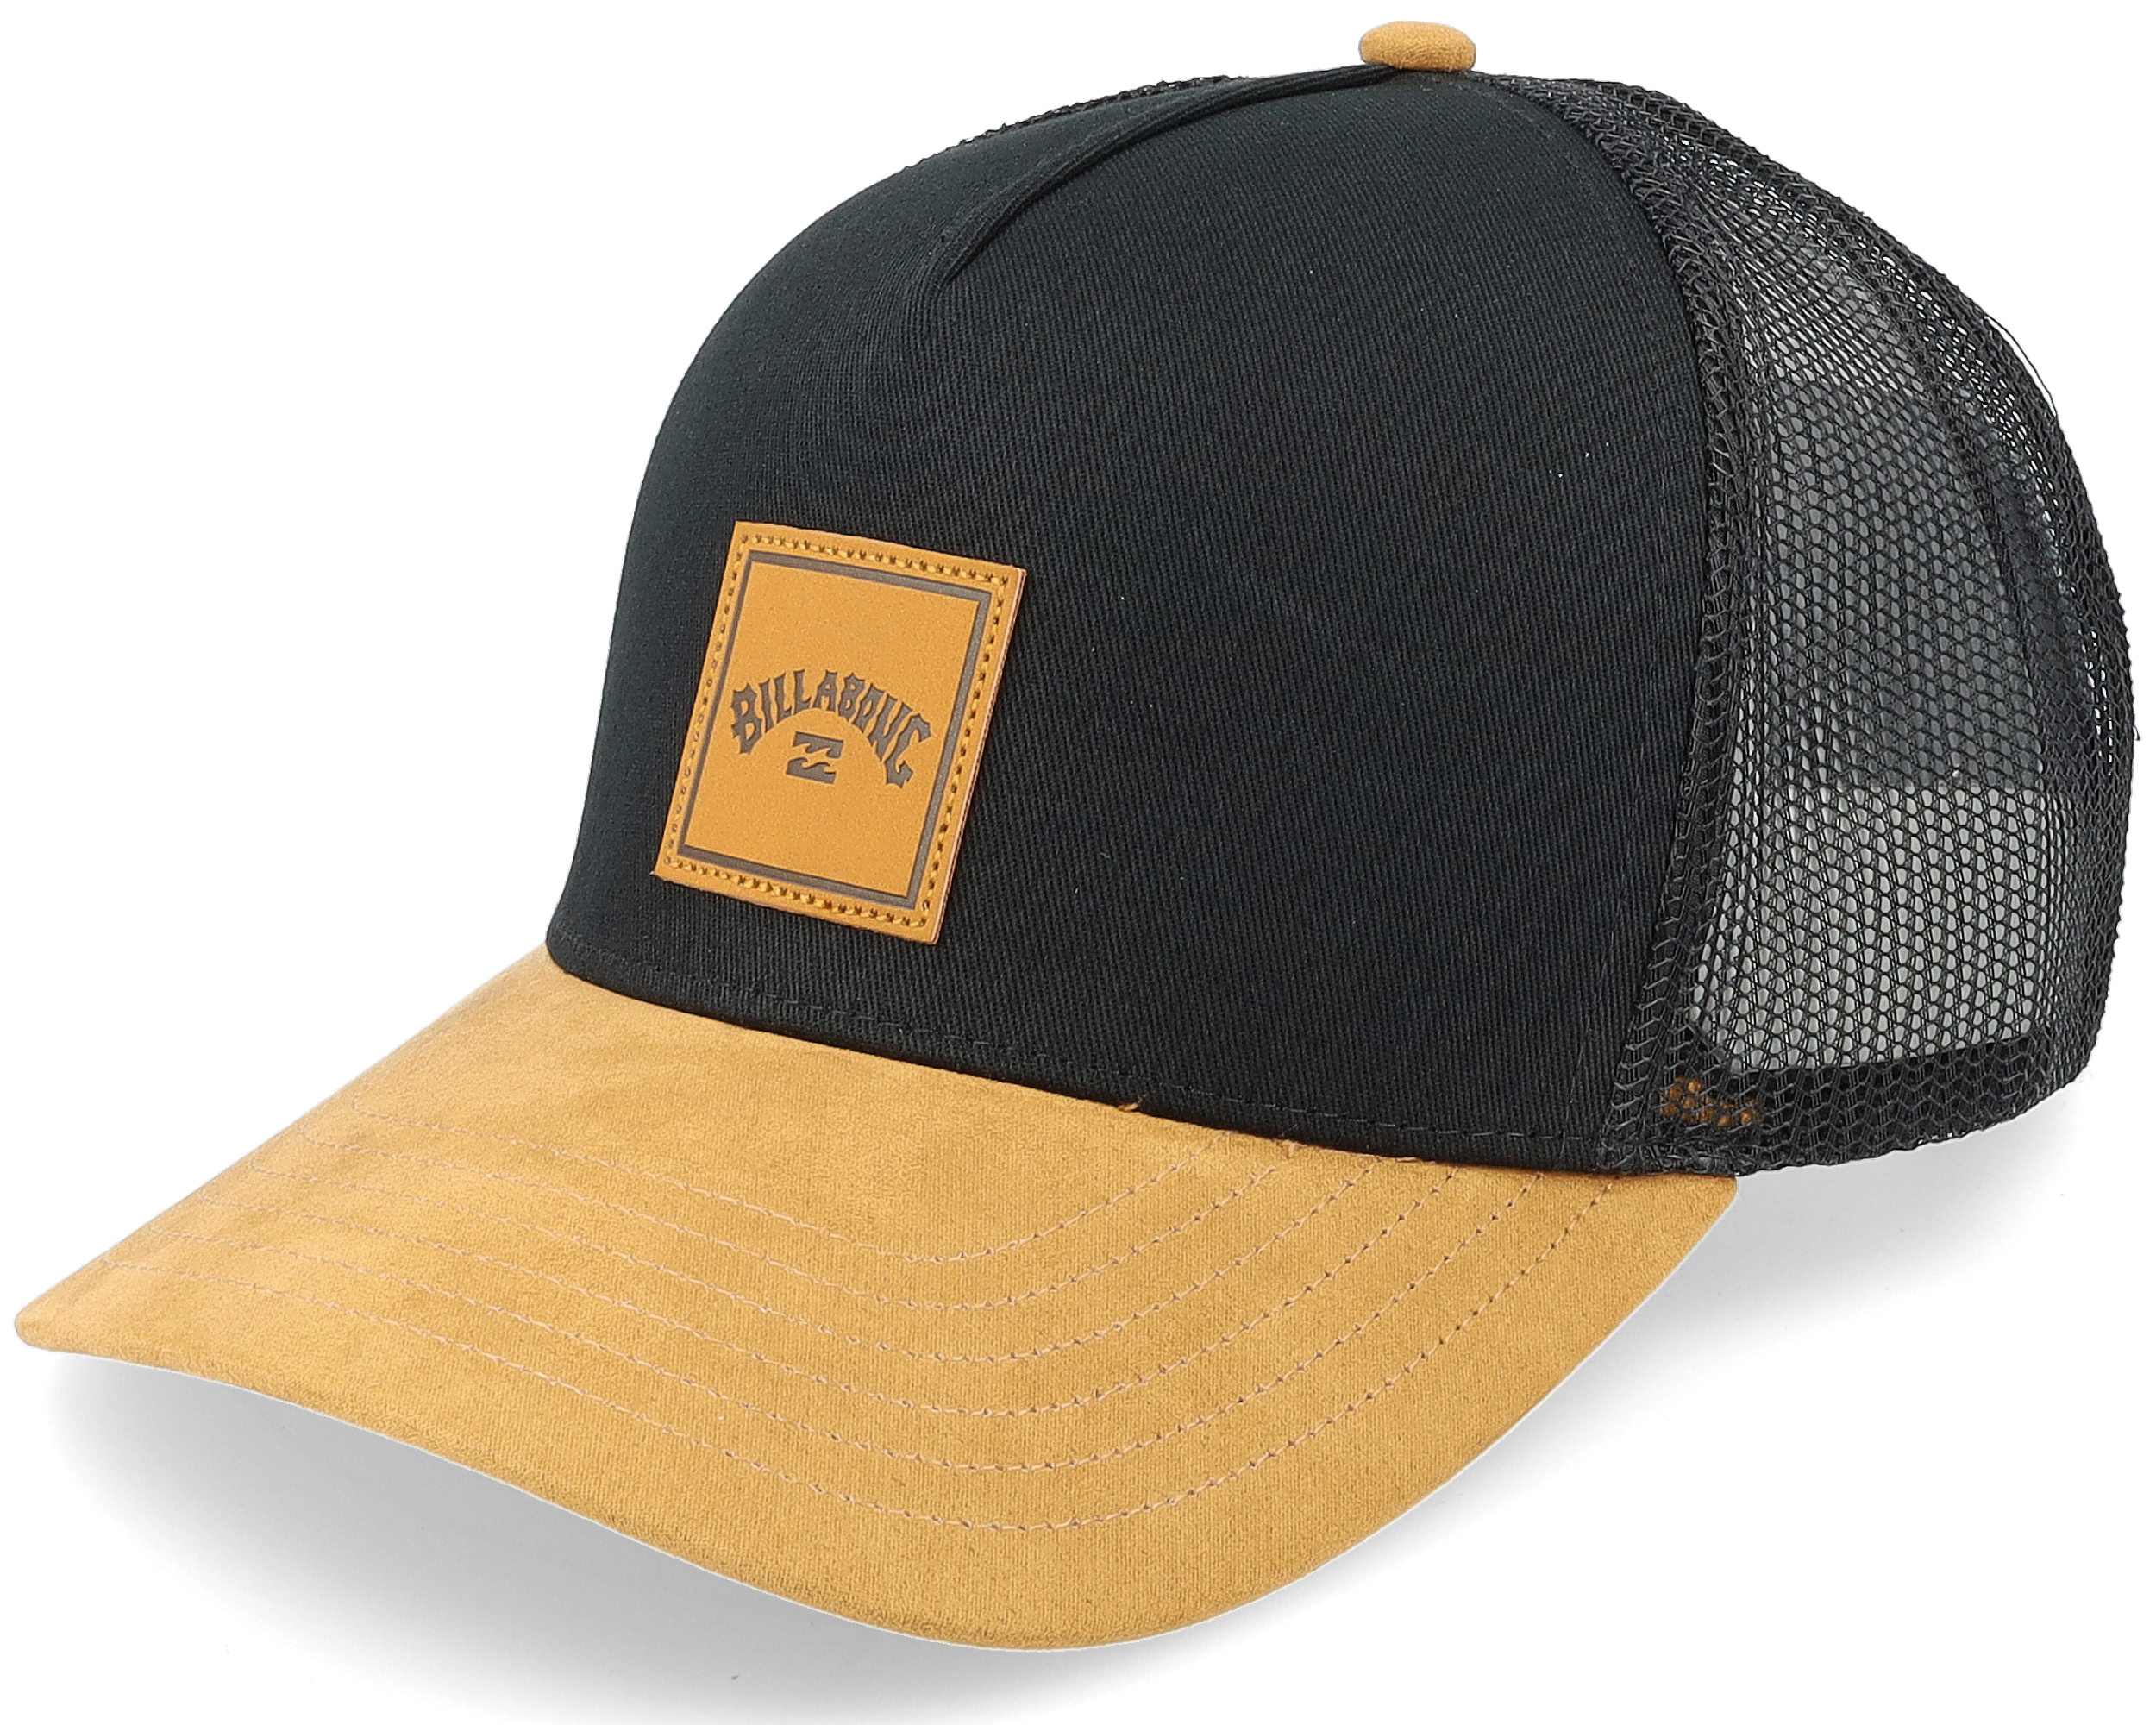 Black/Tan Billabong cap Trucker - Stacked